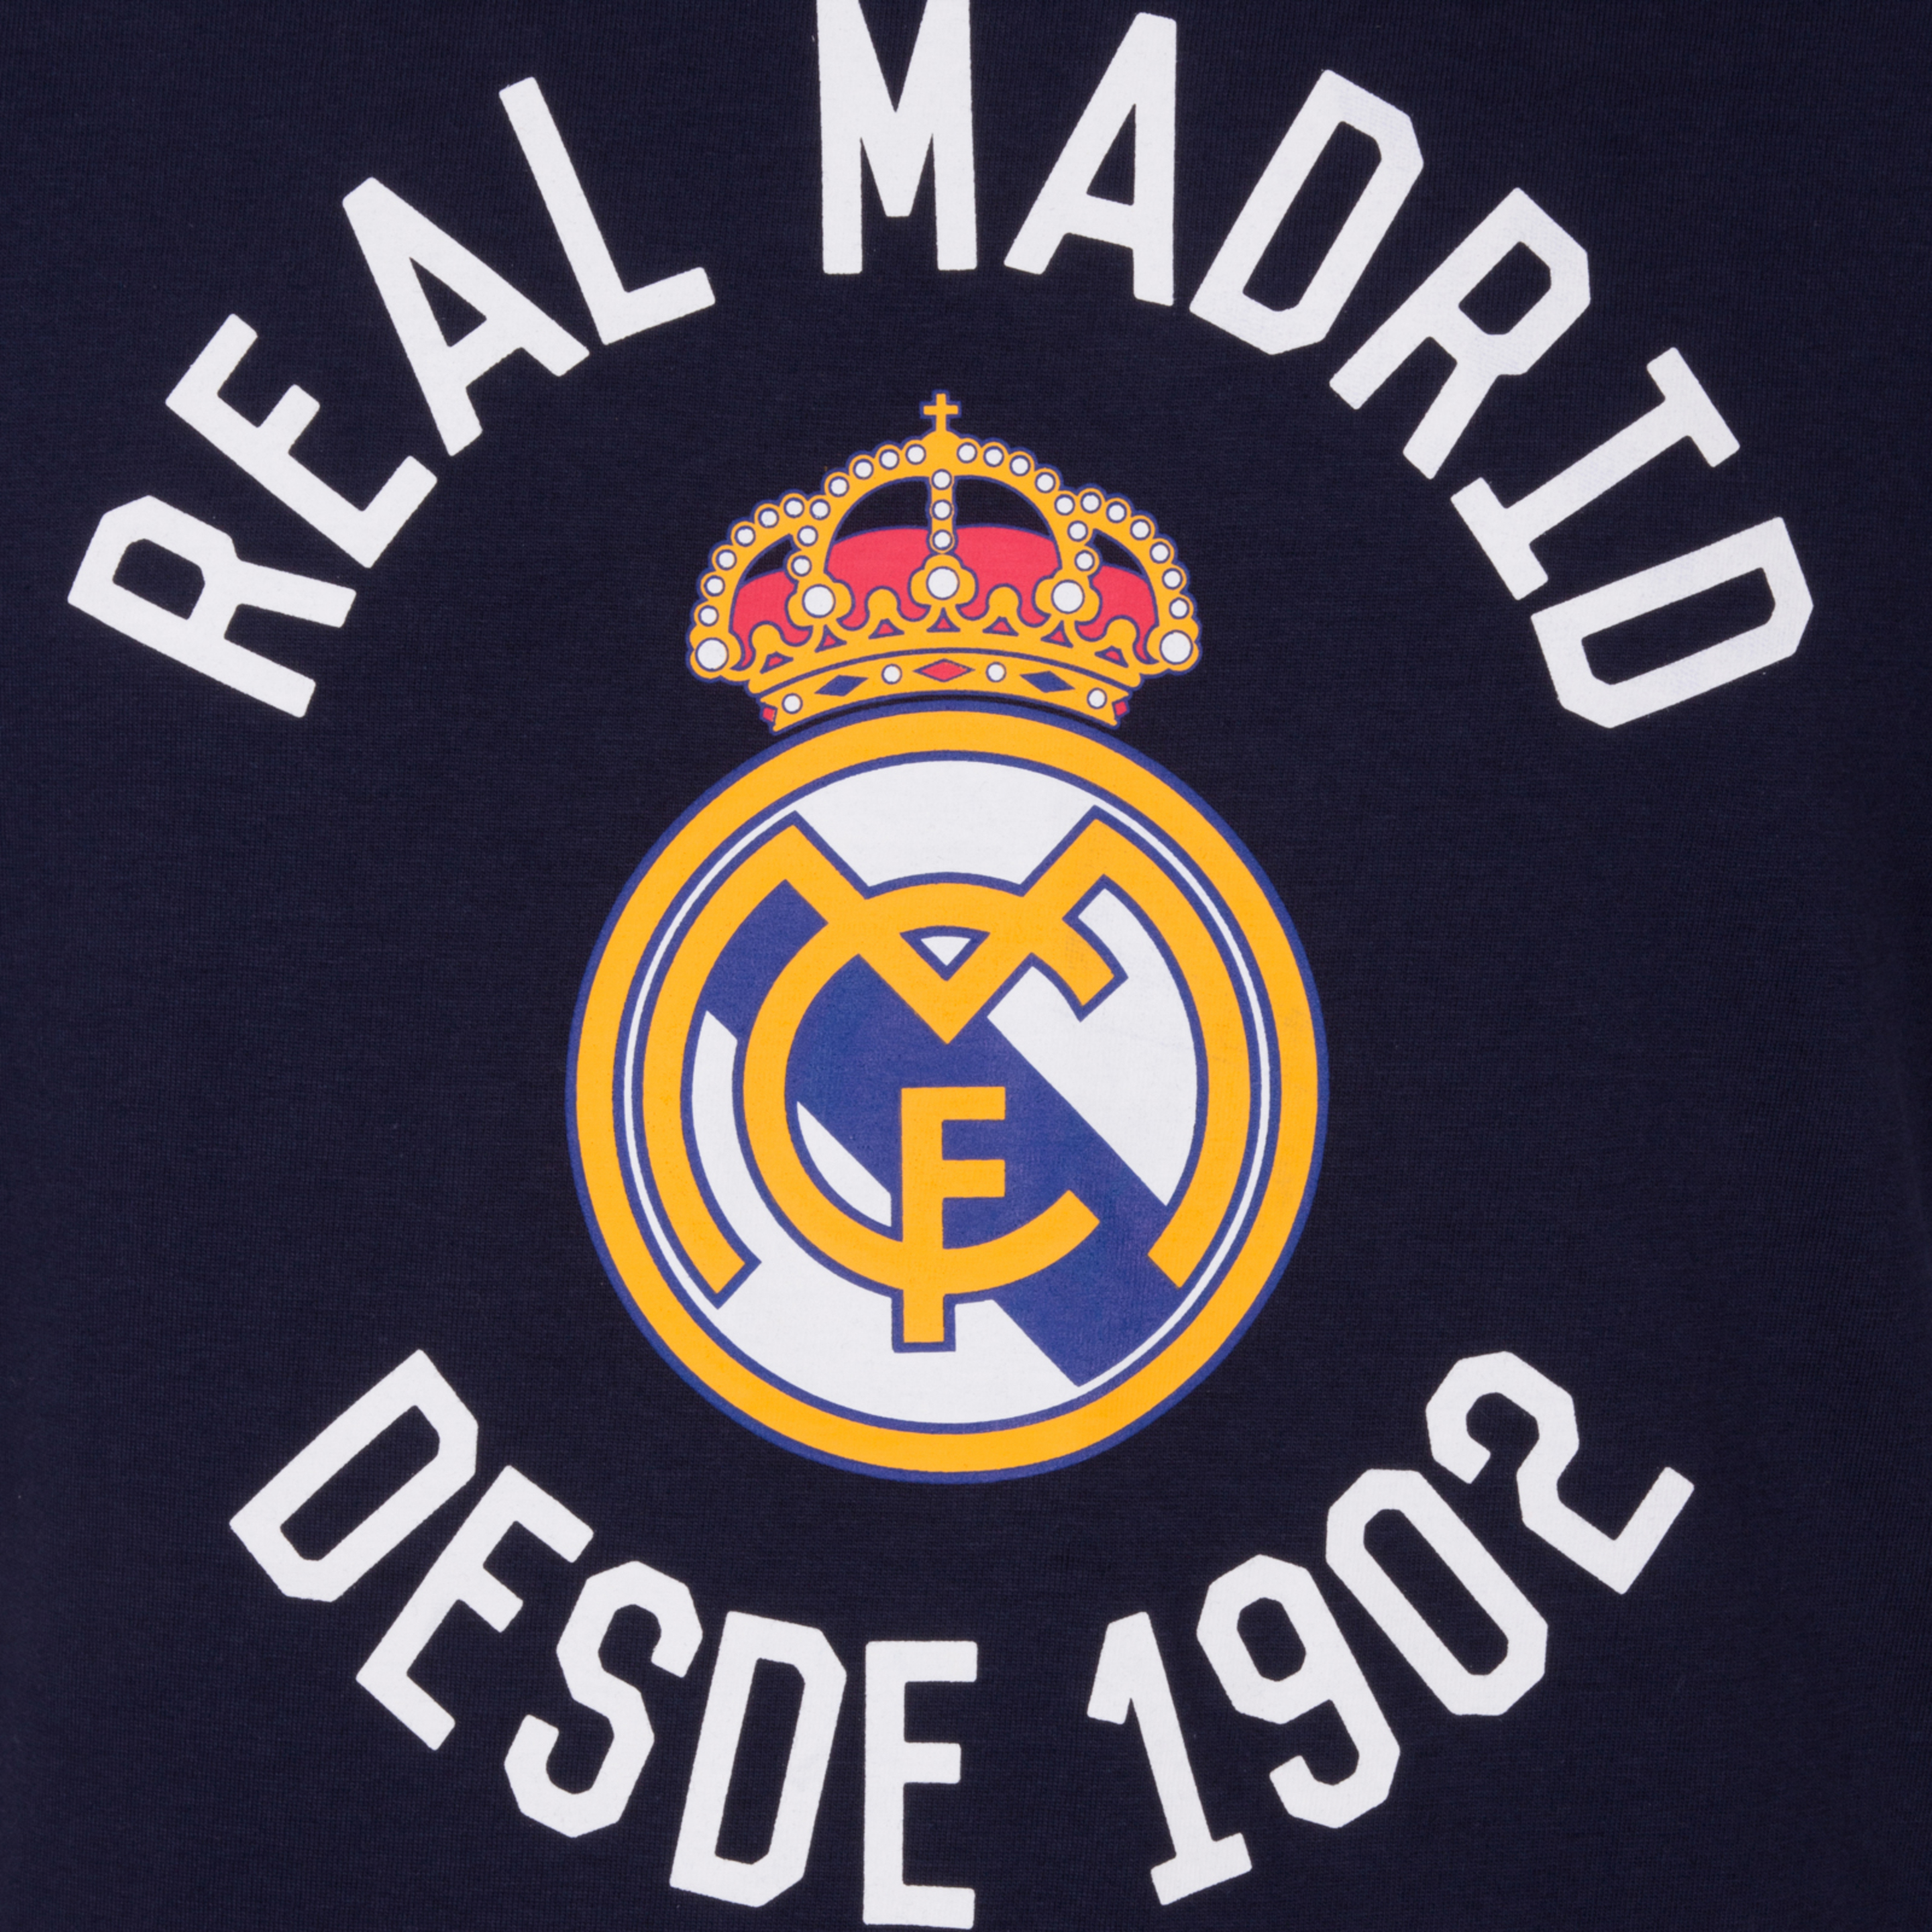 Real Madrid - Camiseta Oficial Para Hombre - Serigrafiada - Xl